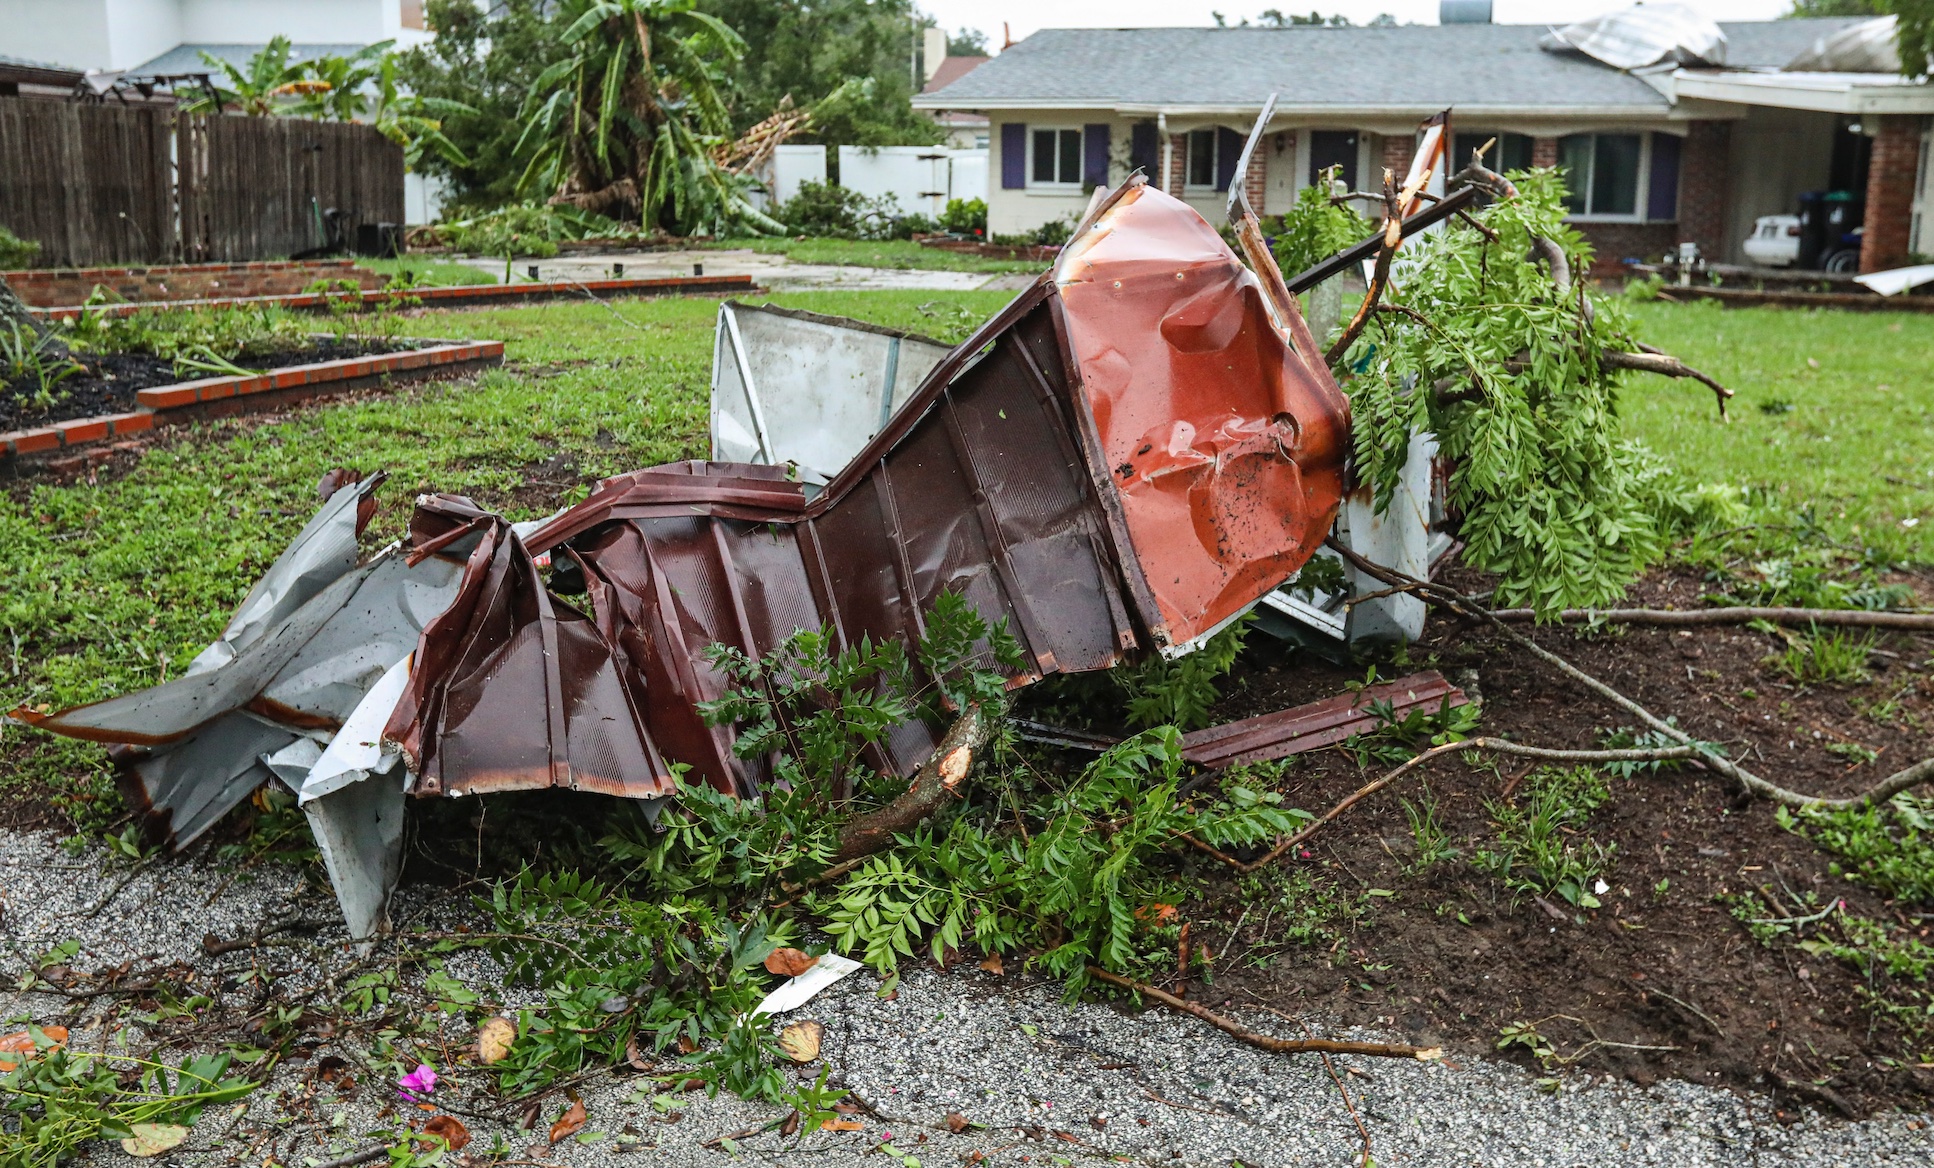 Aftermath of tornado; image by Mick Haupt, via Unsplash.com.